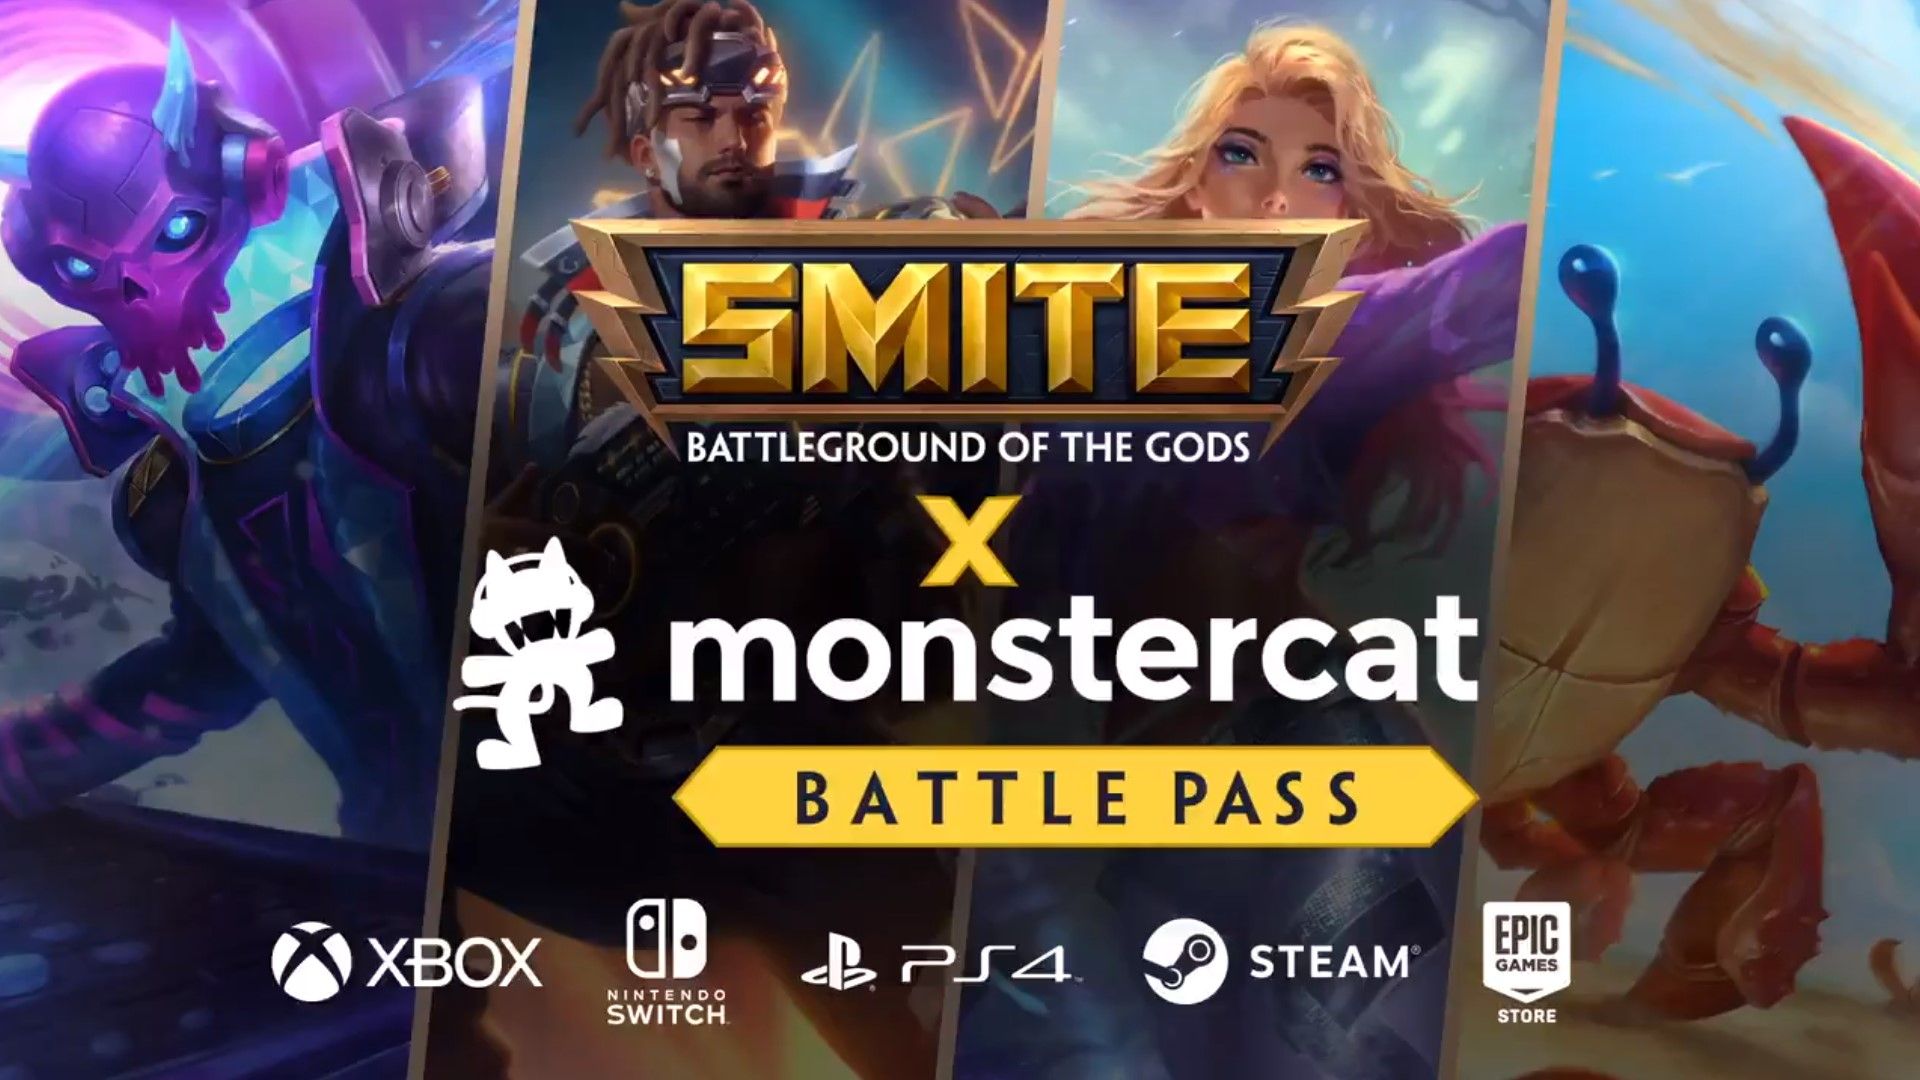 monstercat smite battle pass